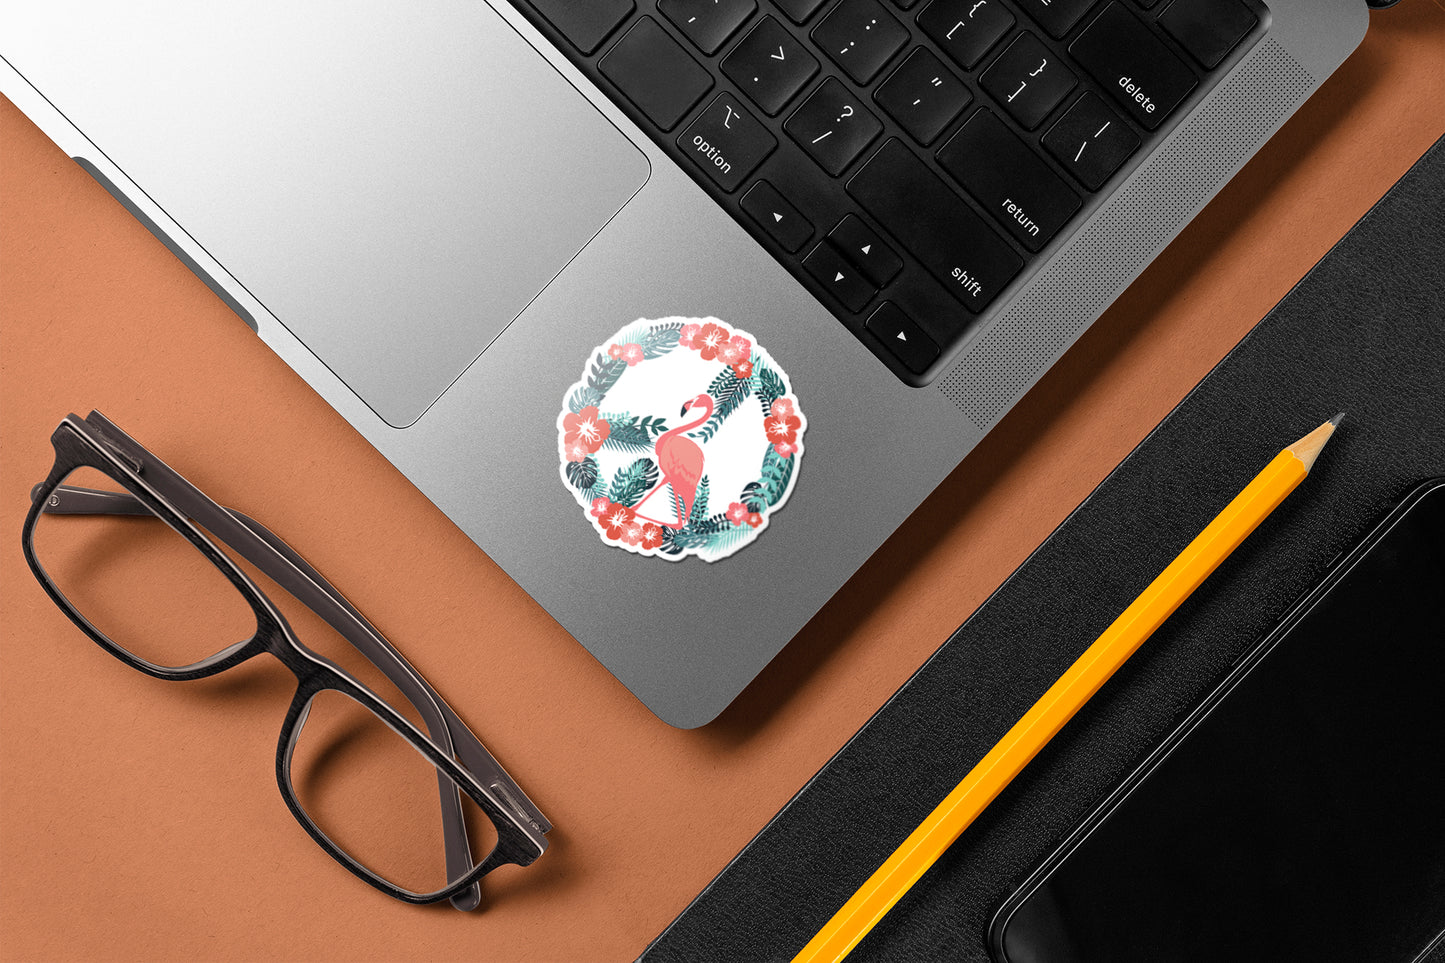 Flamingo Peace - Laptop & Mobile Stickers